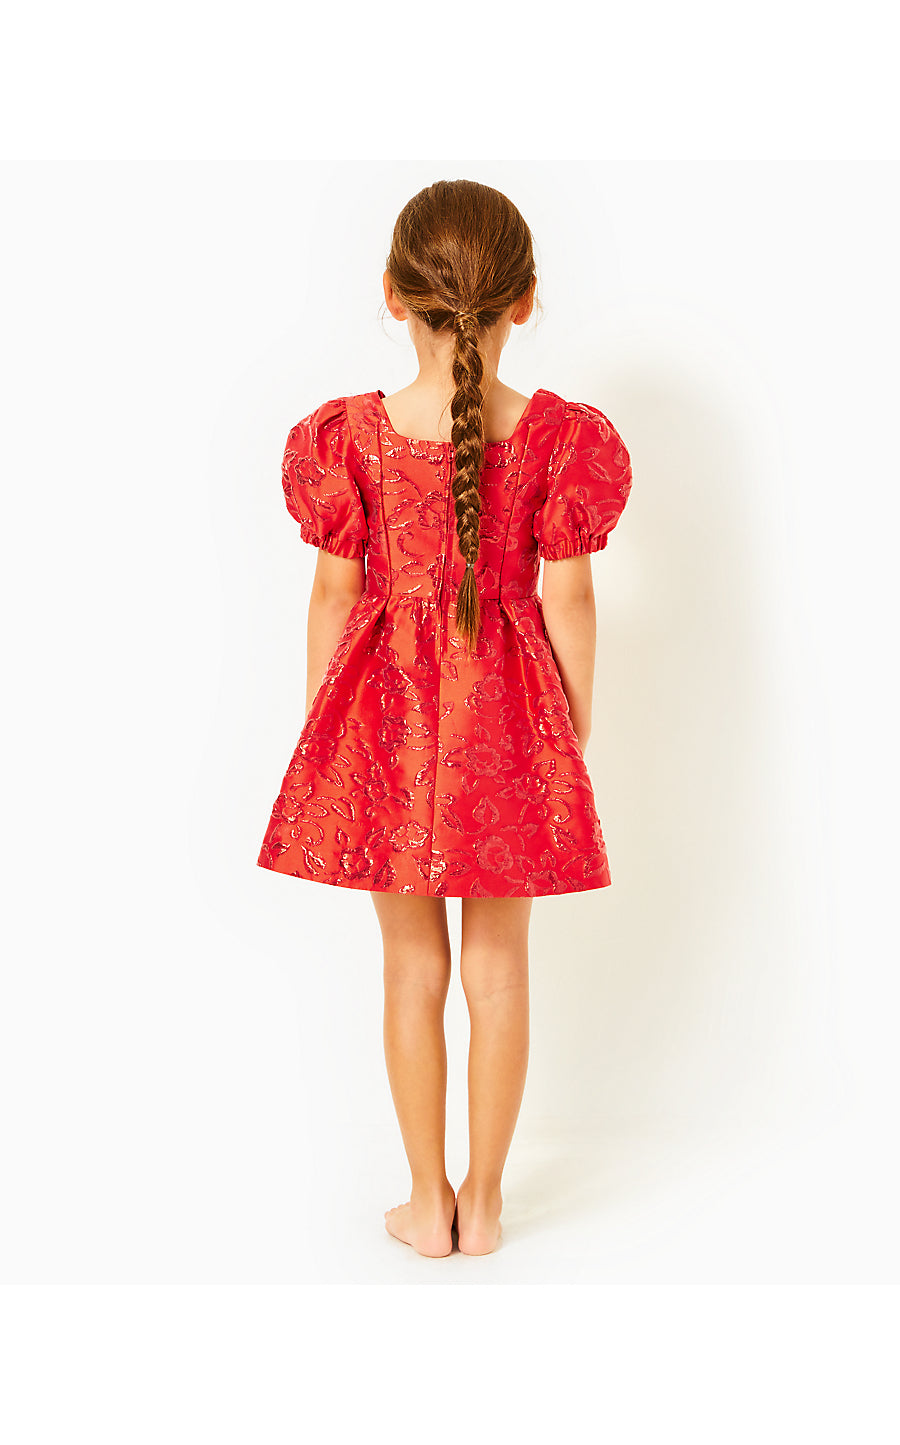 ALANNAH DRESS - AMARYLLIS RED FLORAL BROCADE